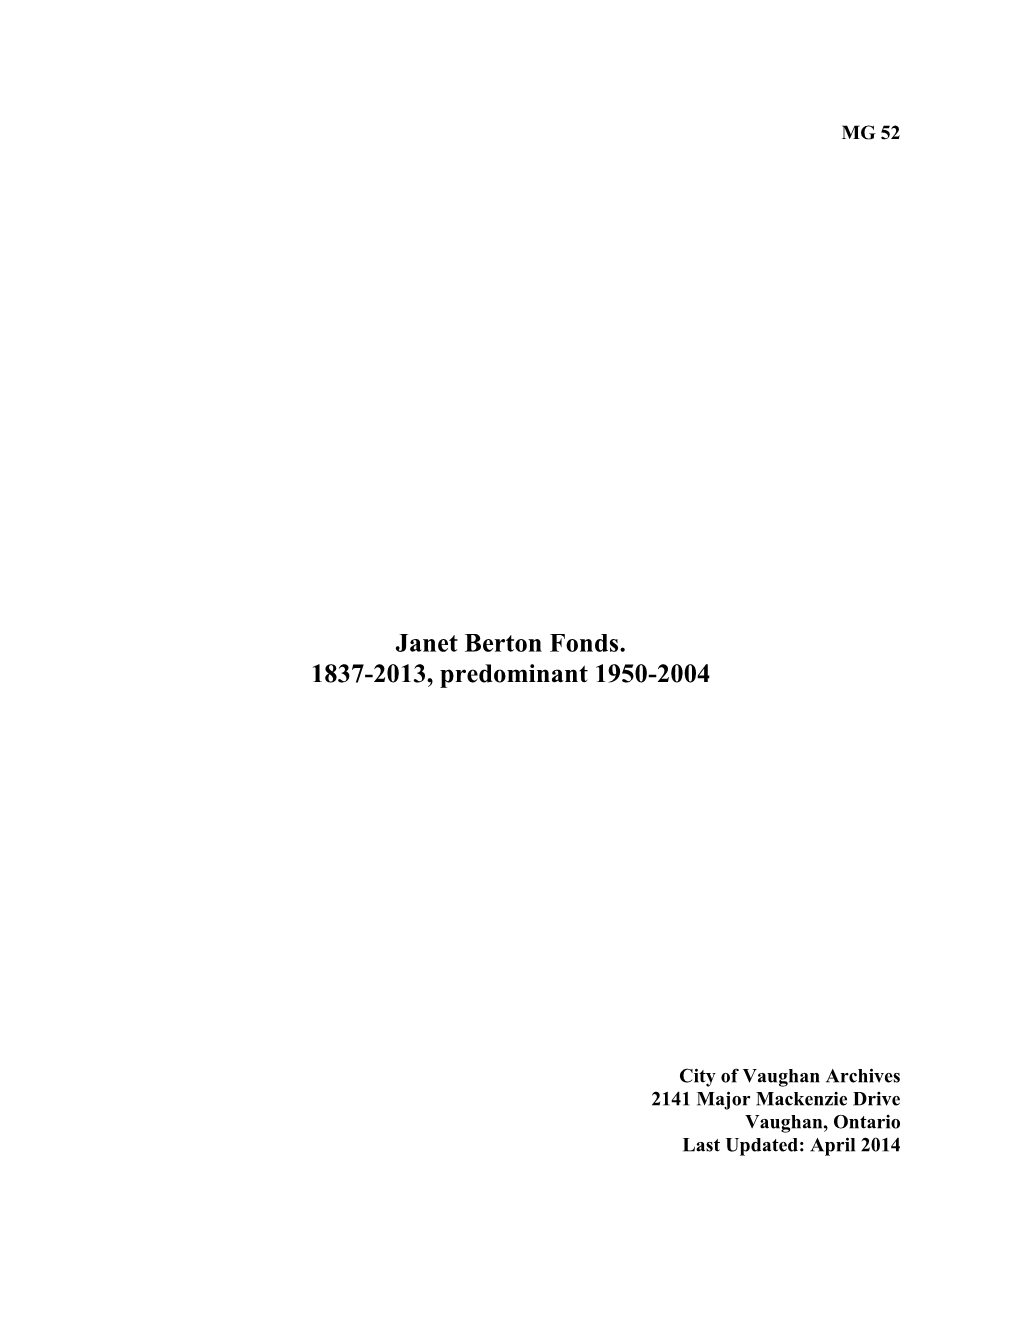 Janet Berton Fonds. 1837-2013, Predominant 1950-2004